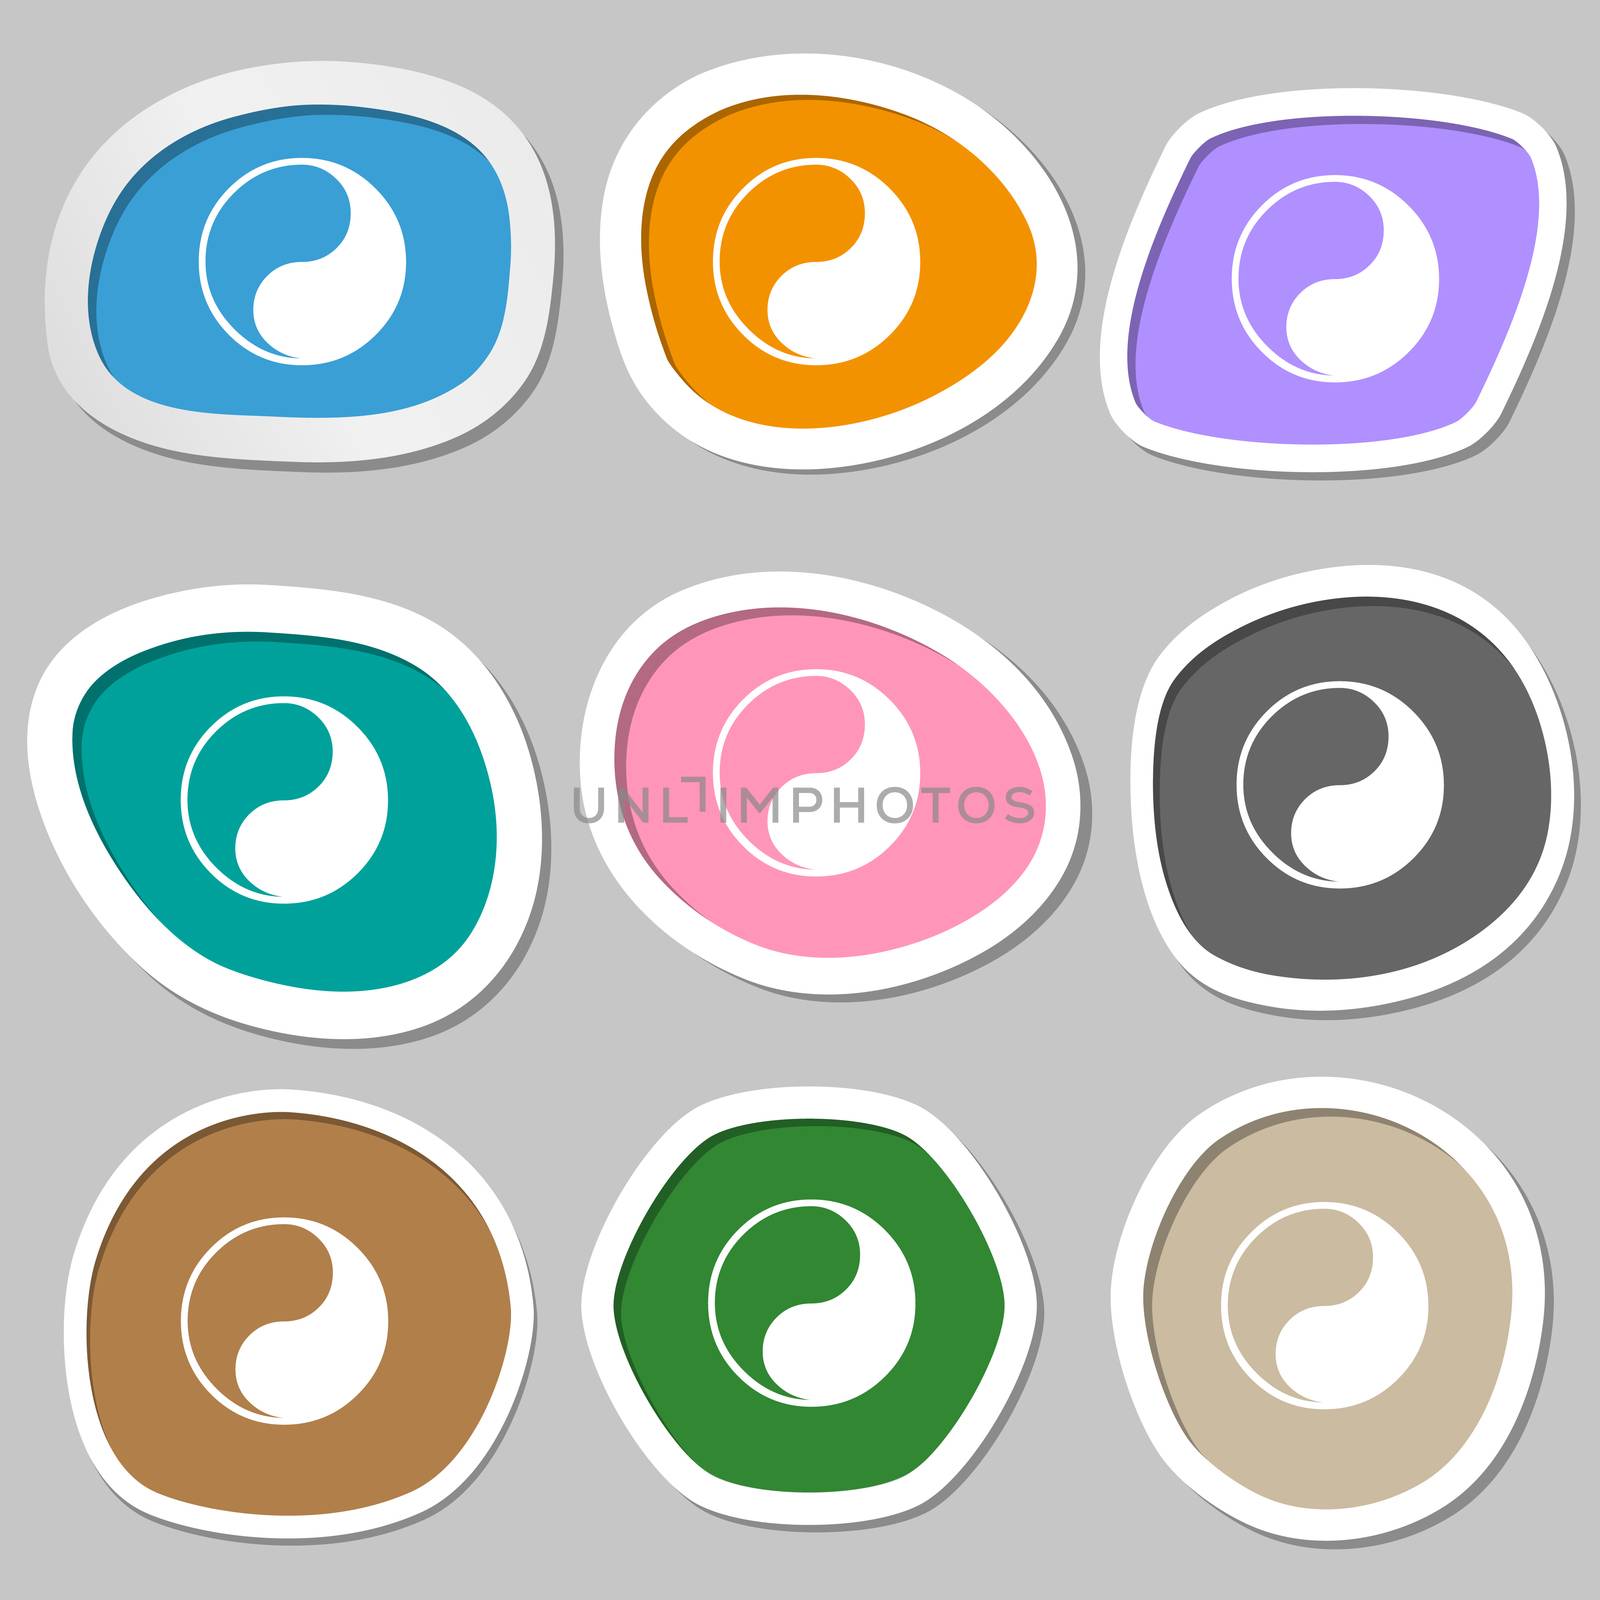 Yin Yang icon symbols. Multicolored paper stickers. illustration